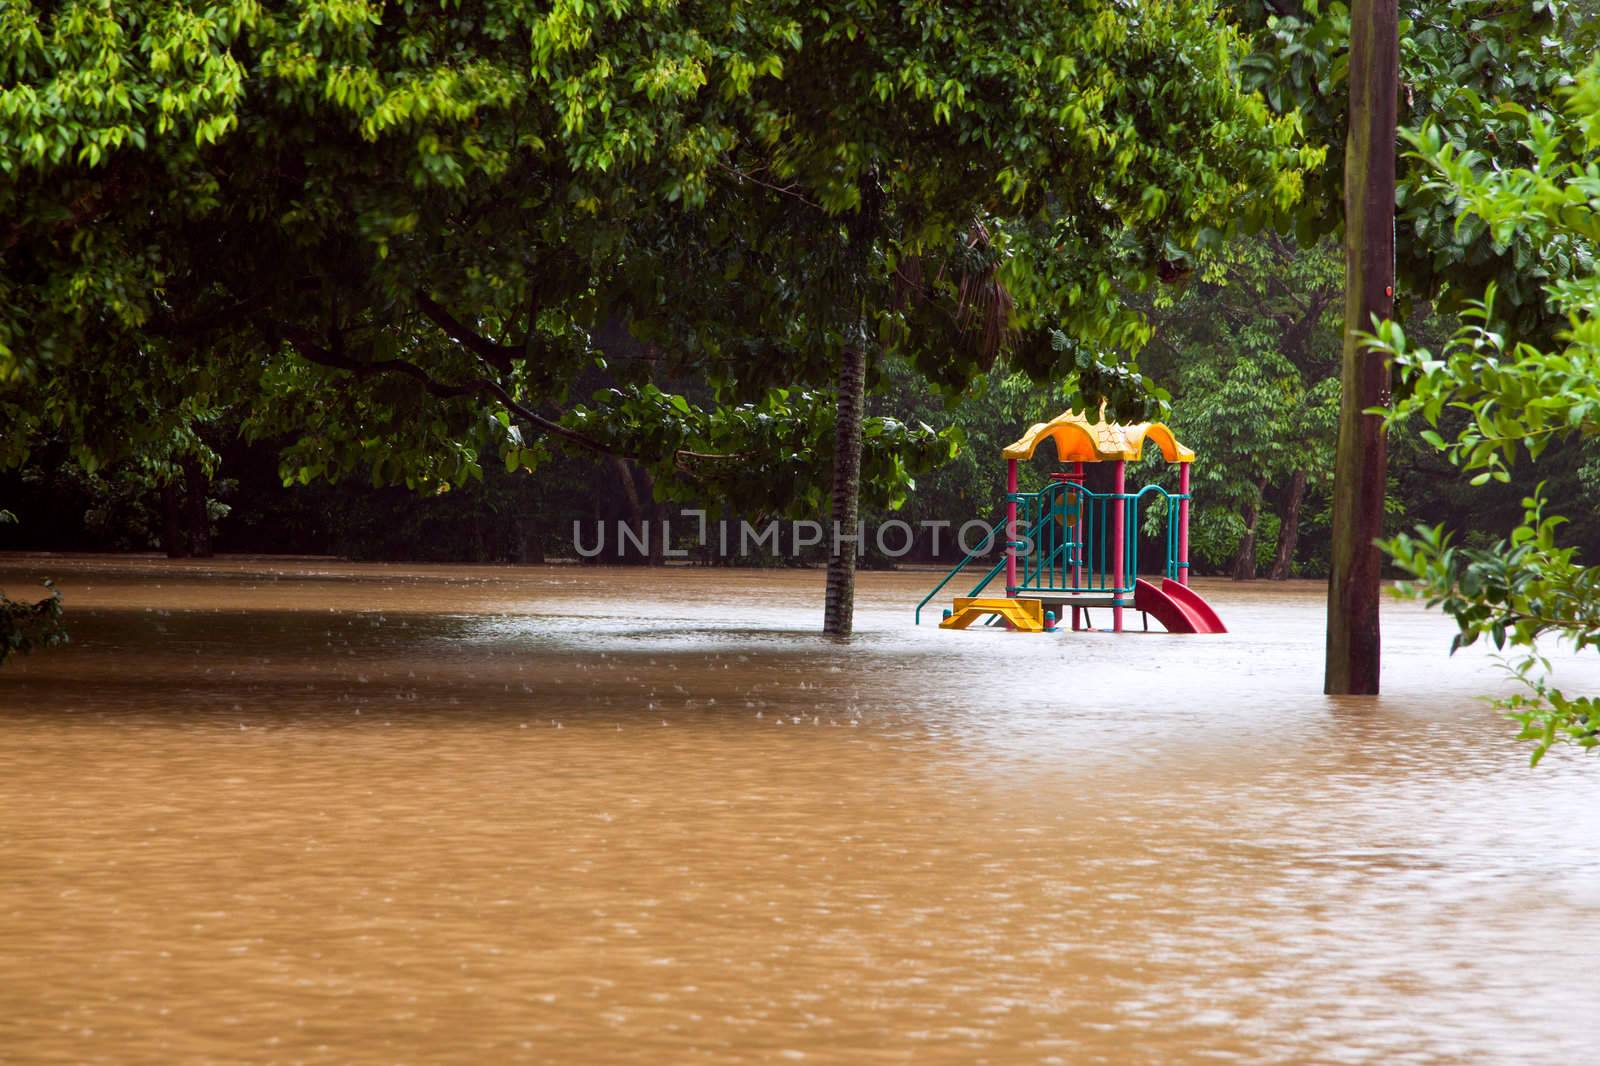 Childrens playground under water after heavy rain and flooding in Queensland Australia